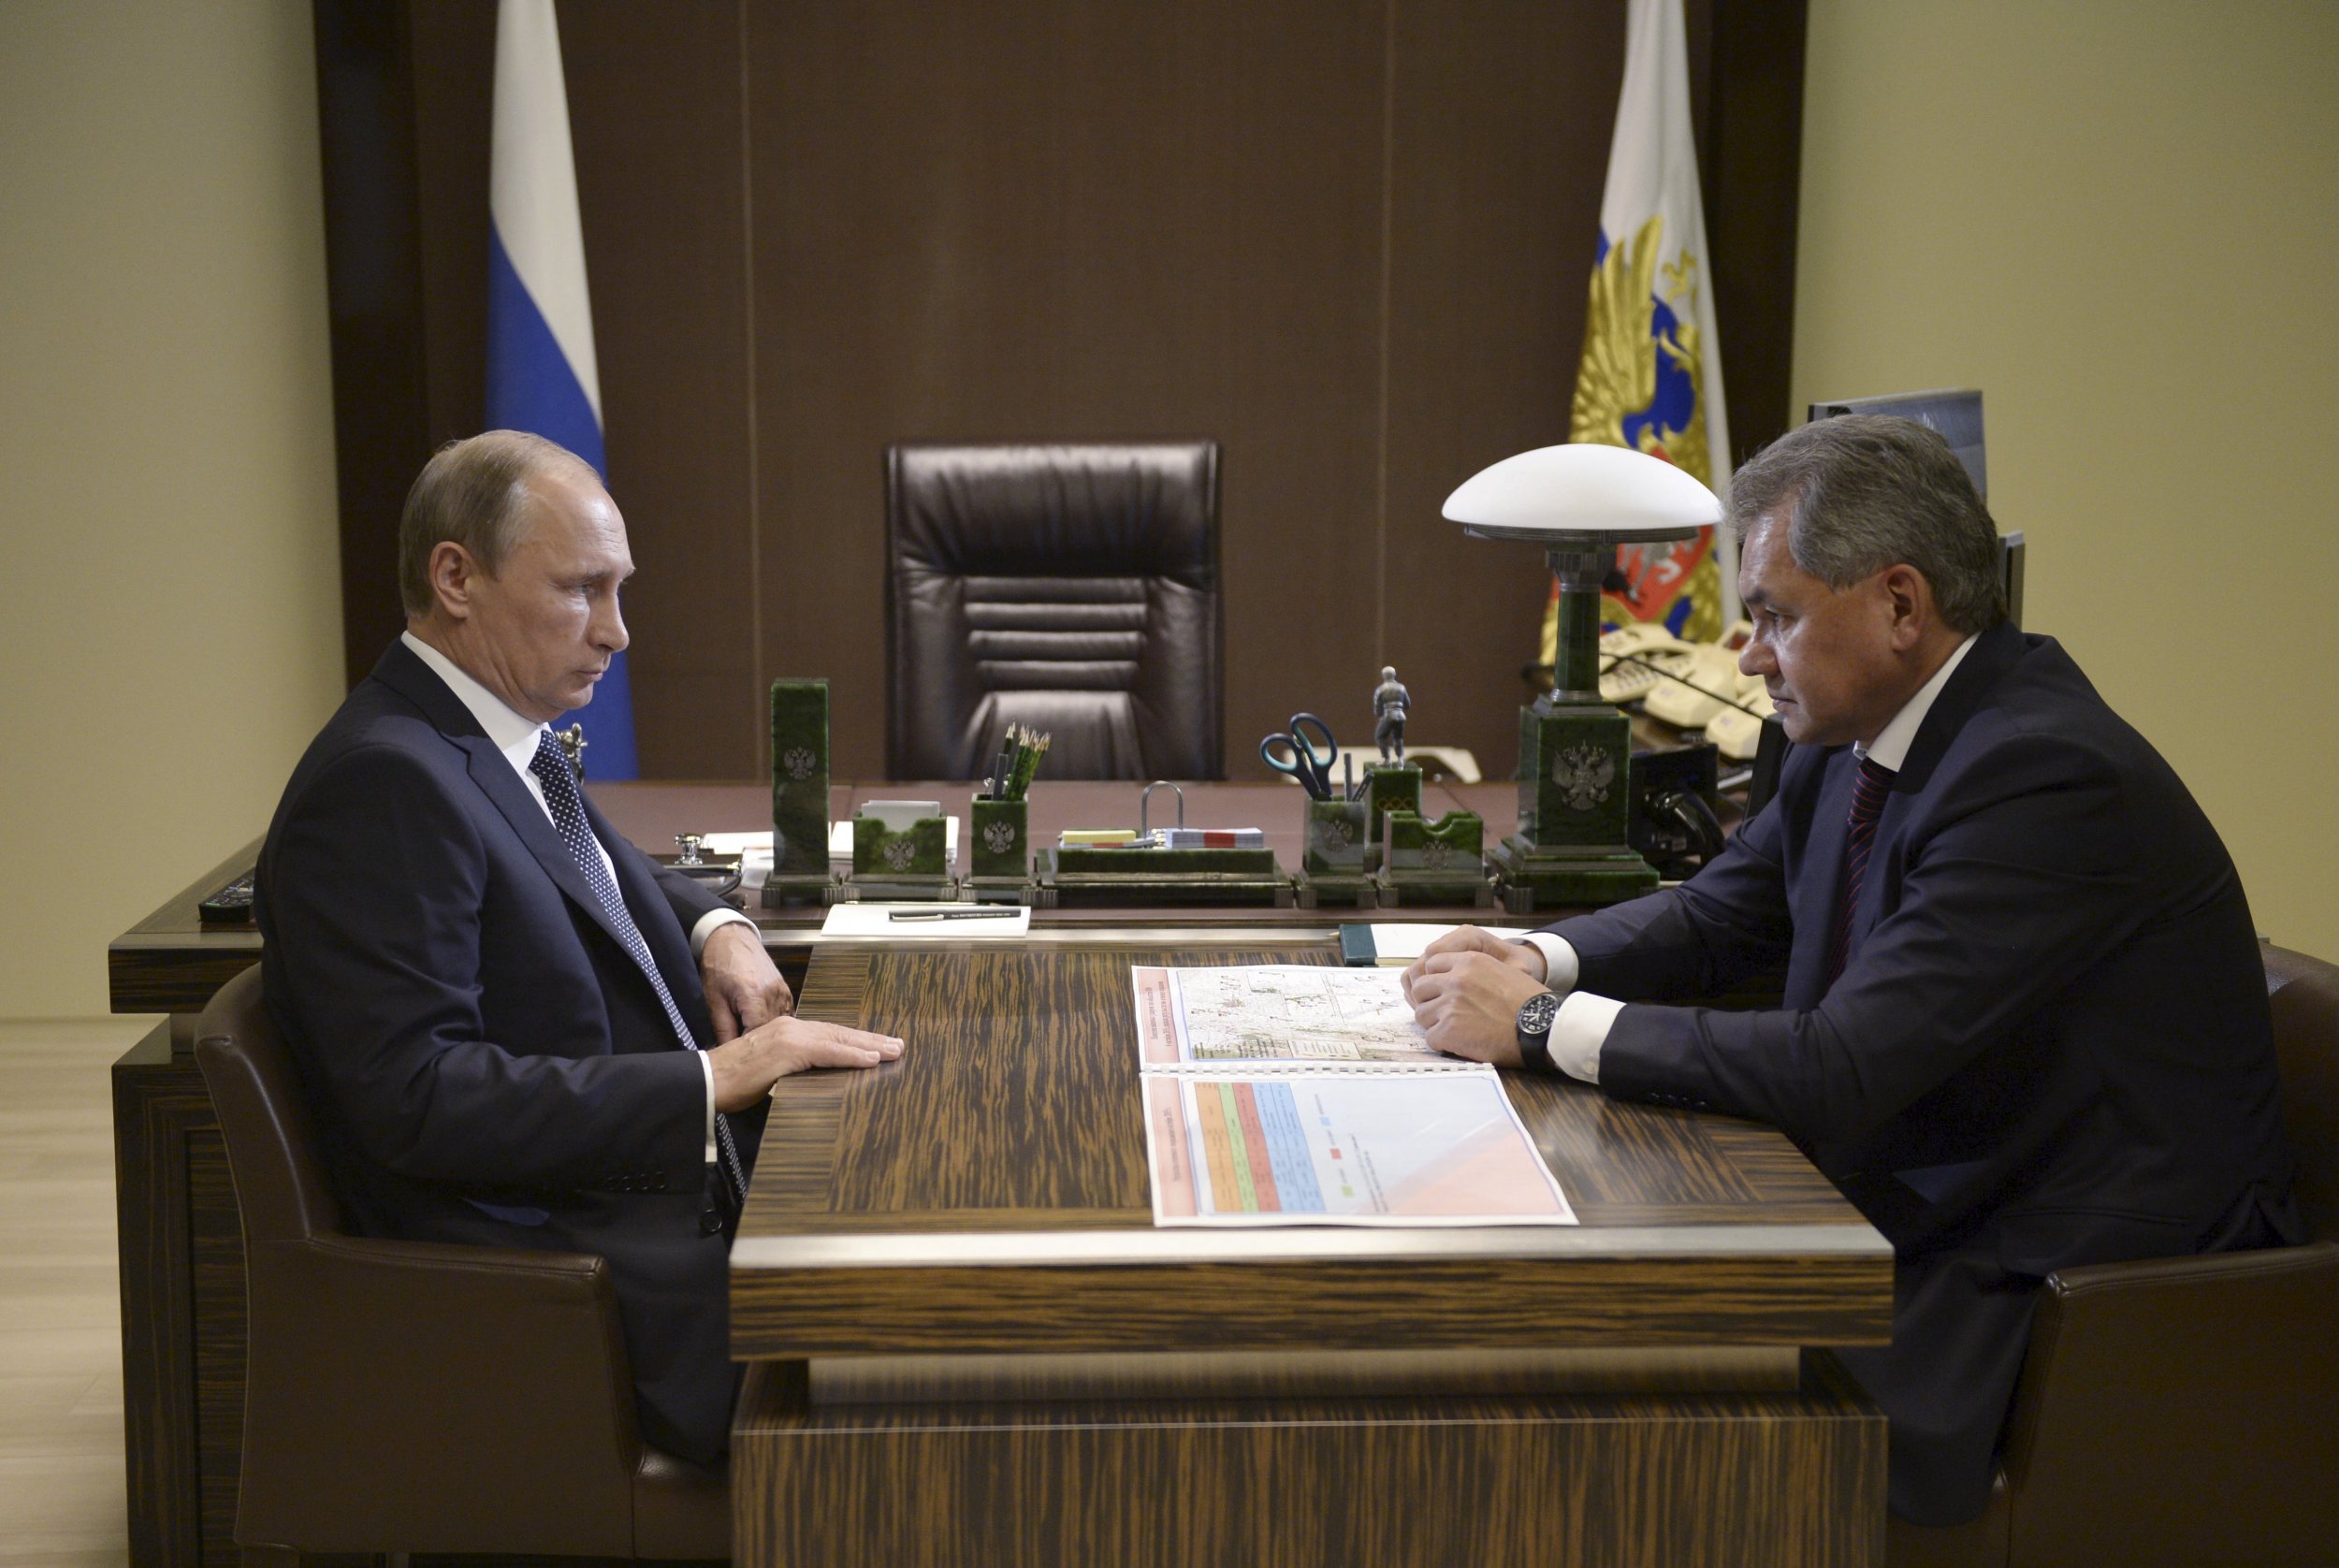 Putin sits opposite Shoigu at his desk